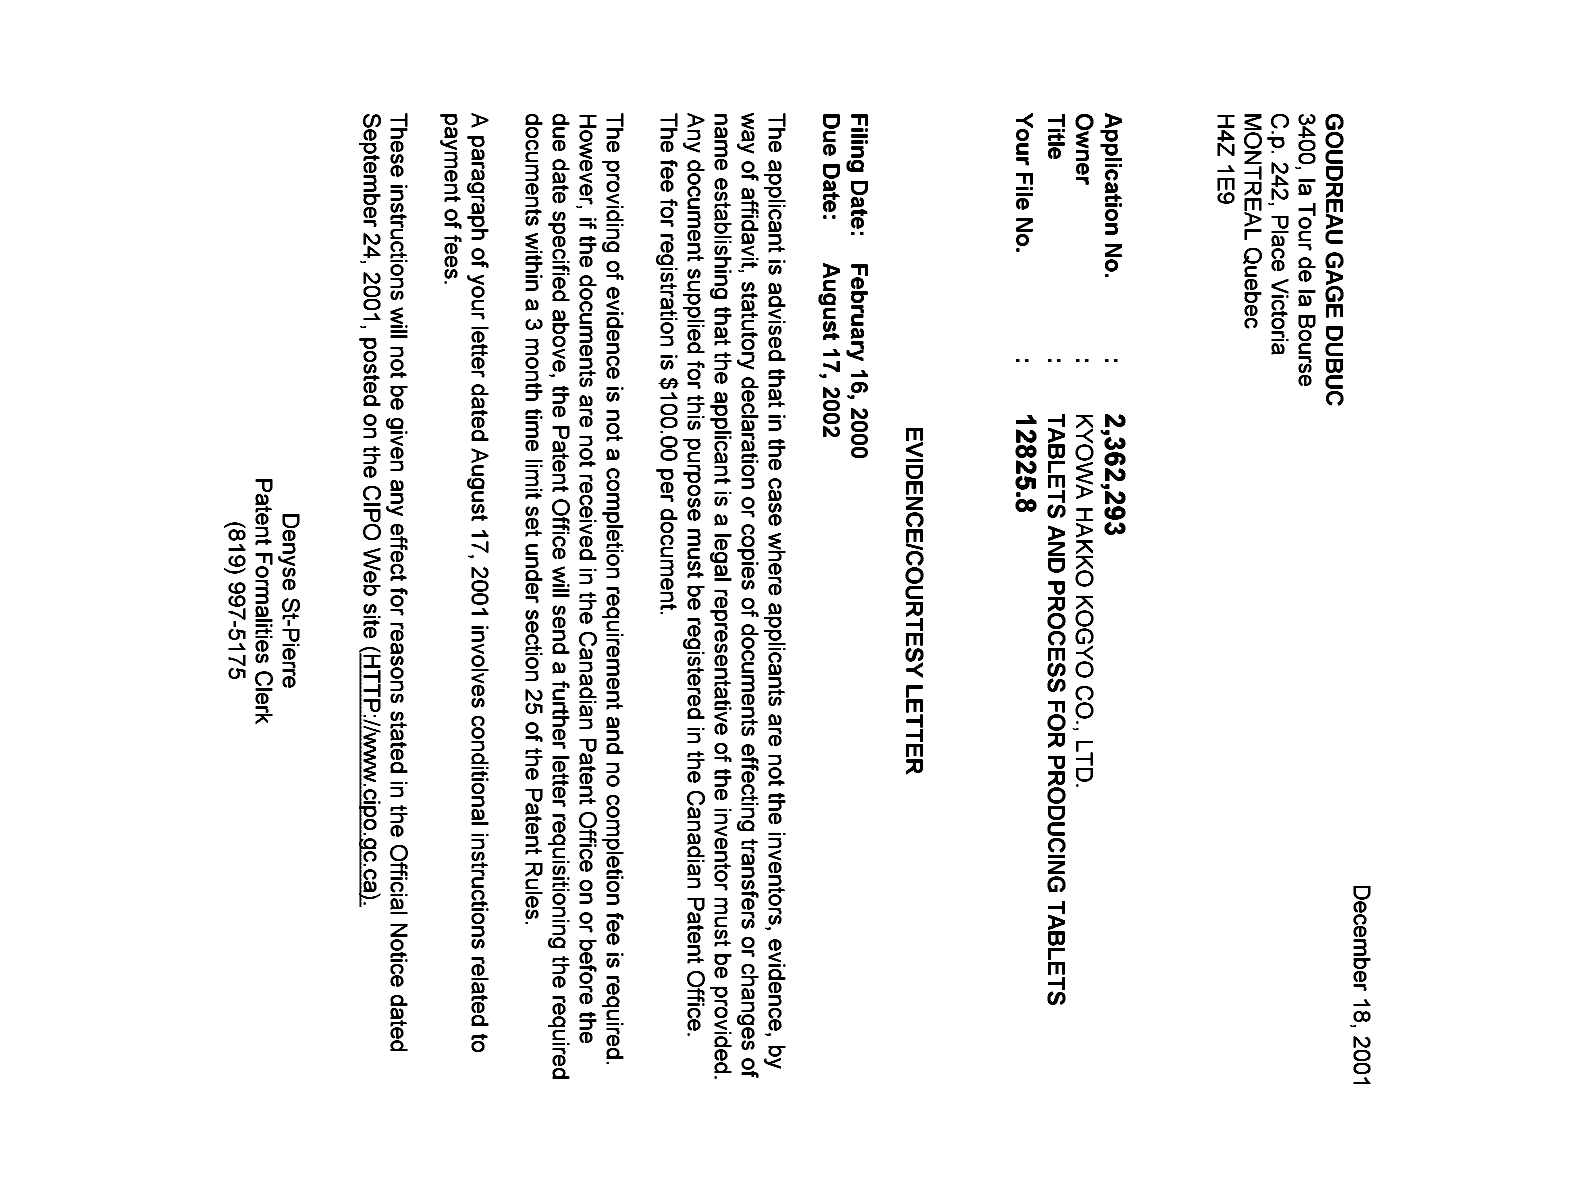 Canadian Patent Document 2362293. Correspondence 20001212. Image 1 of 1